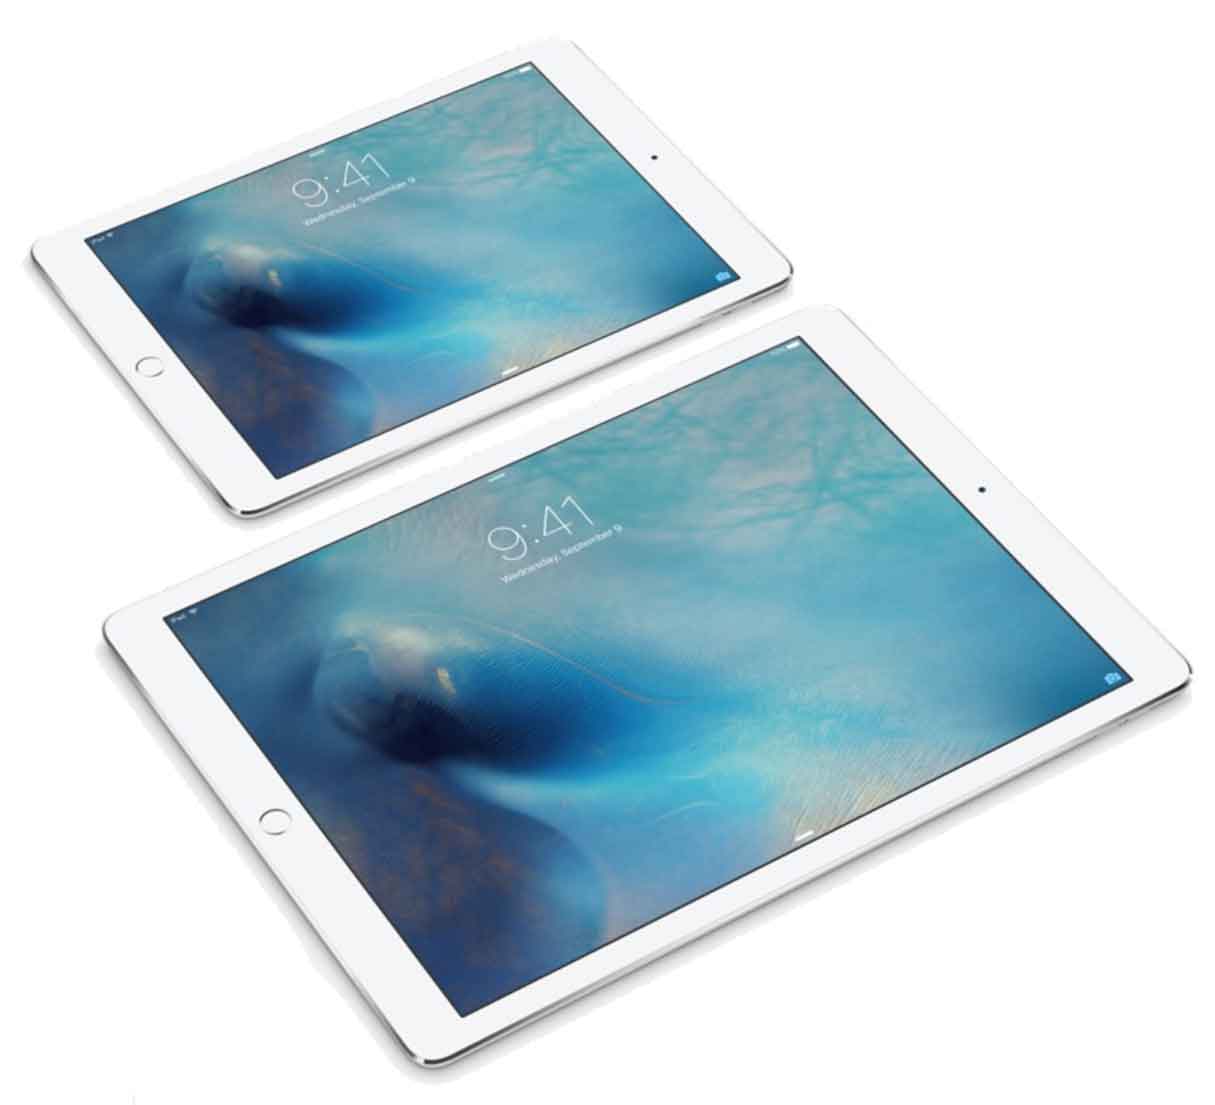 9.7 inch Apple iPad Pro price and specs revealed